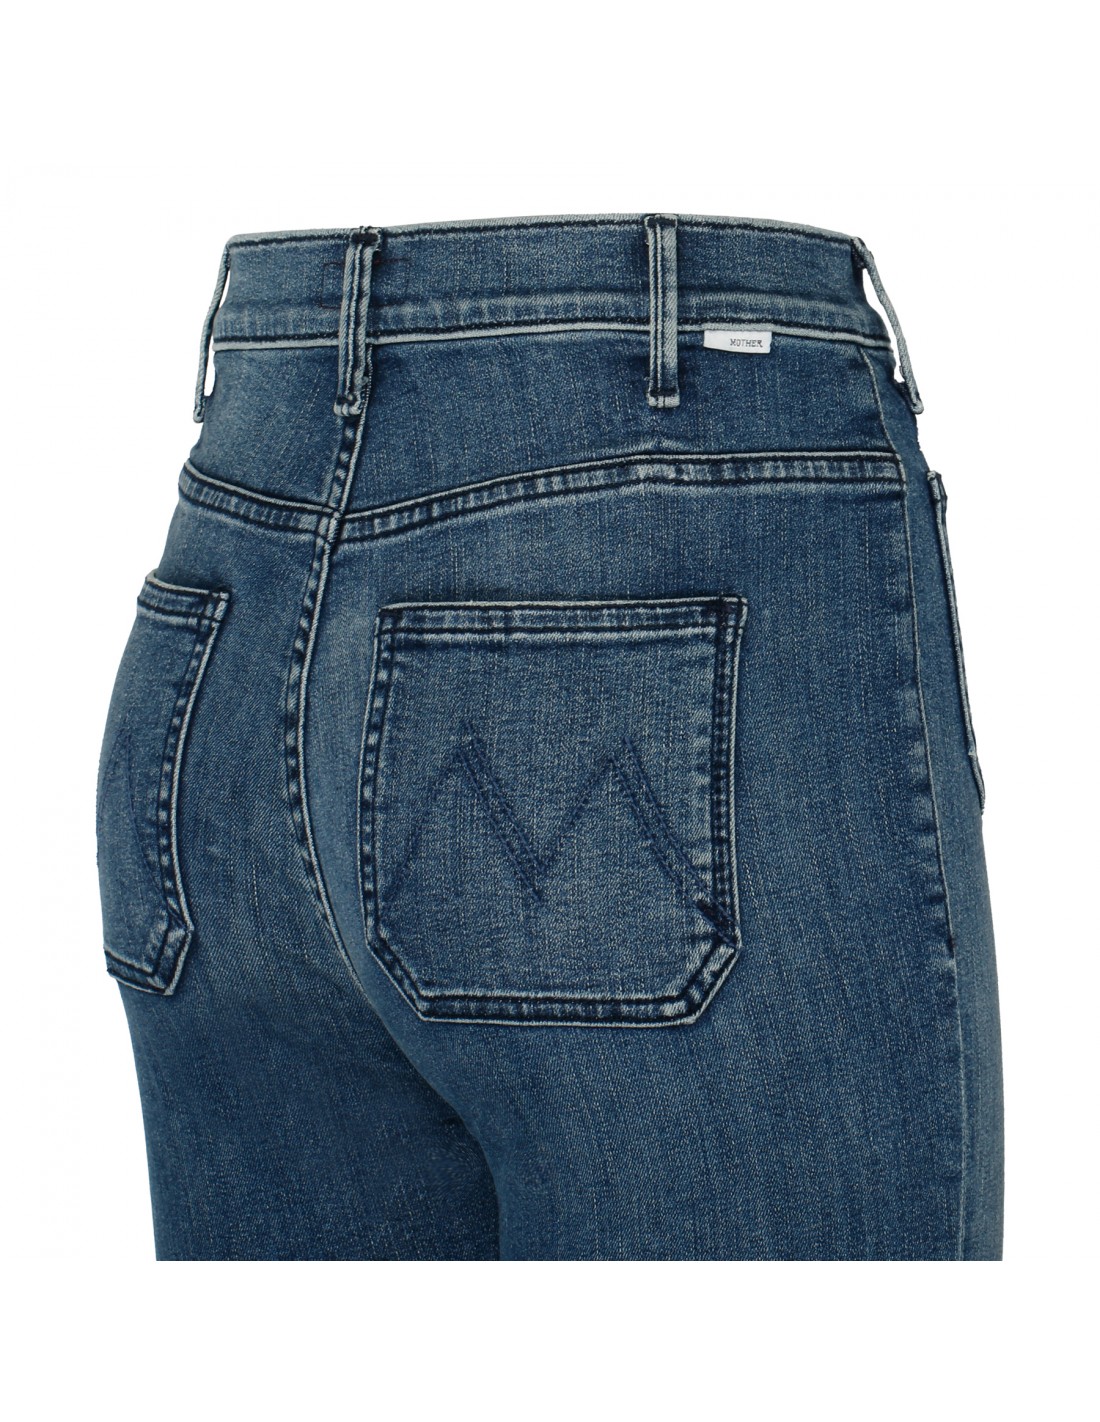 The Hustler Patch Pocket Ankle Fray jeans